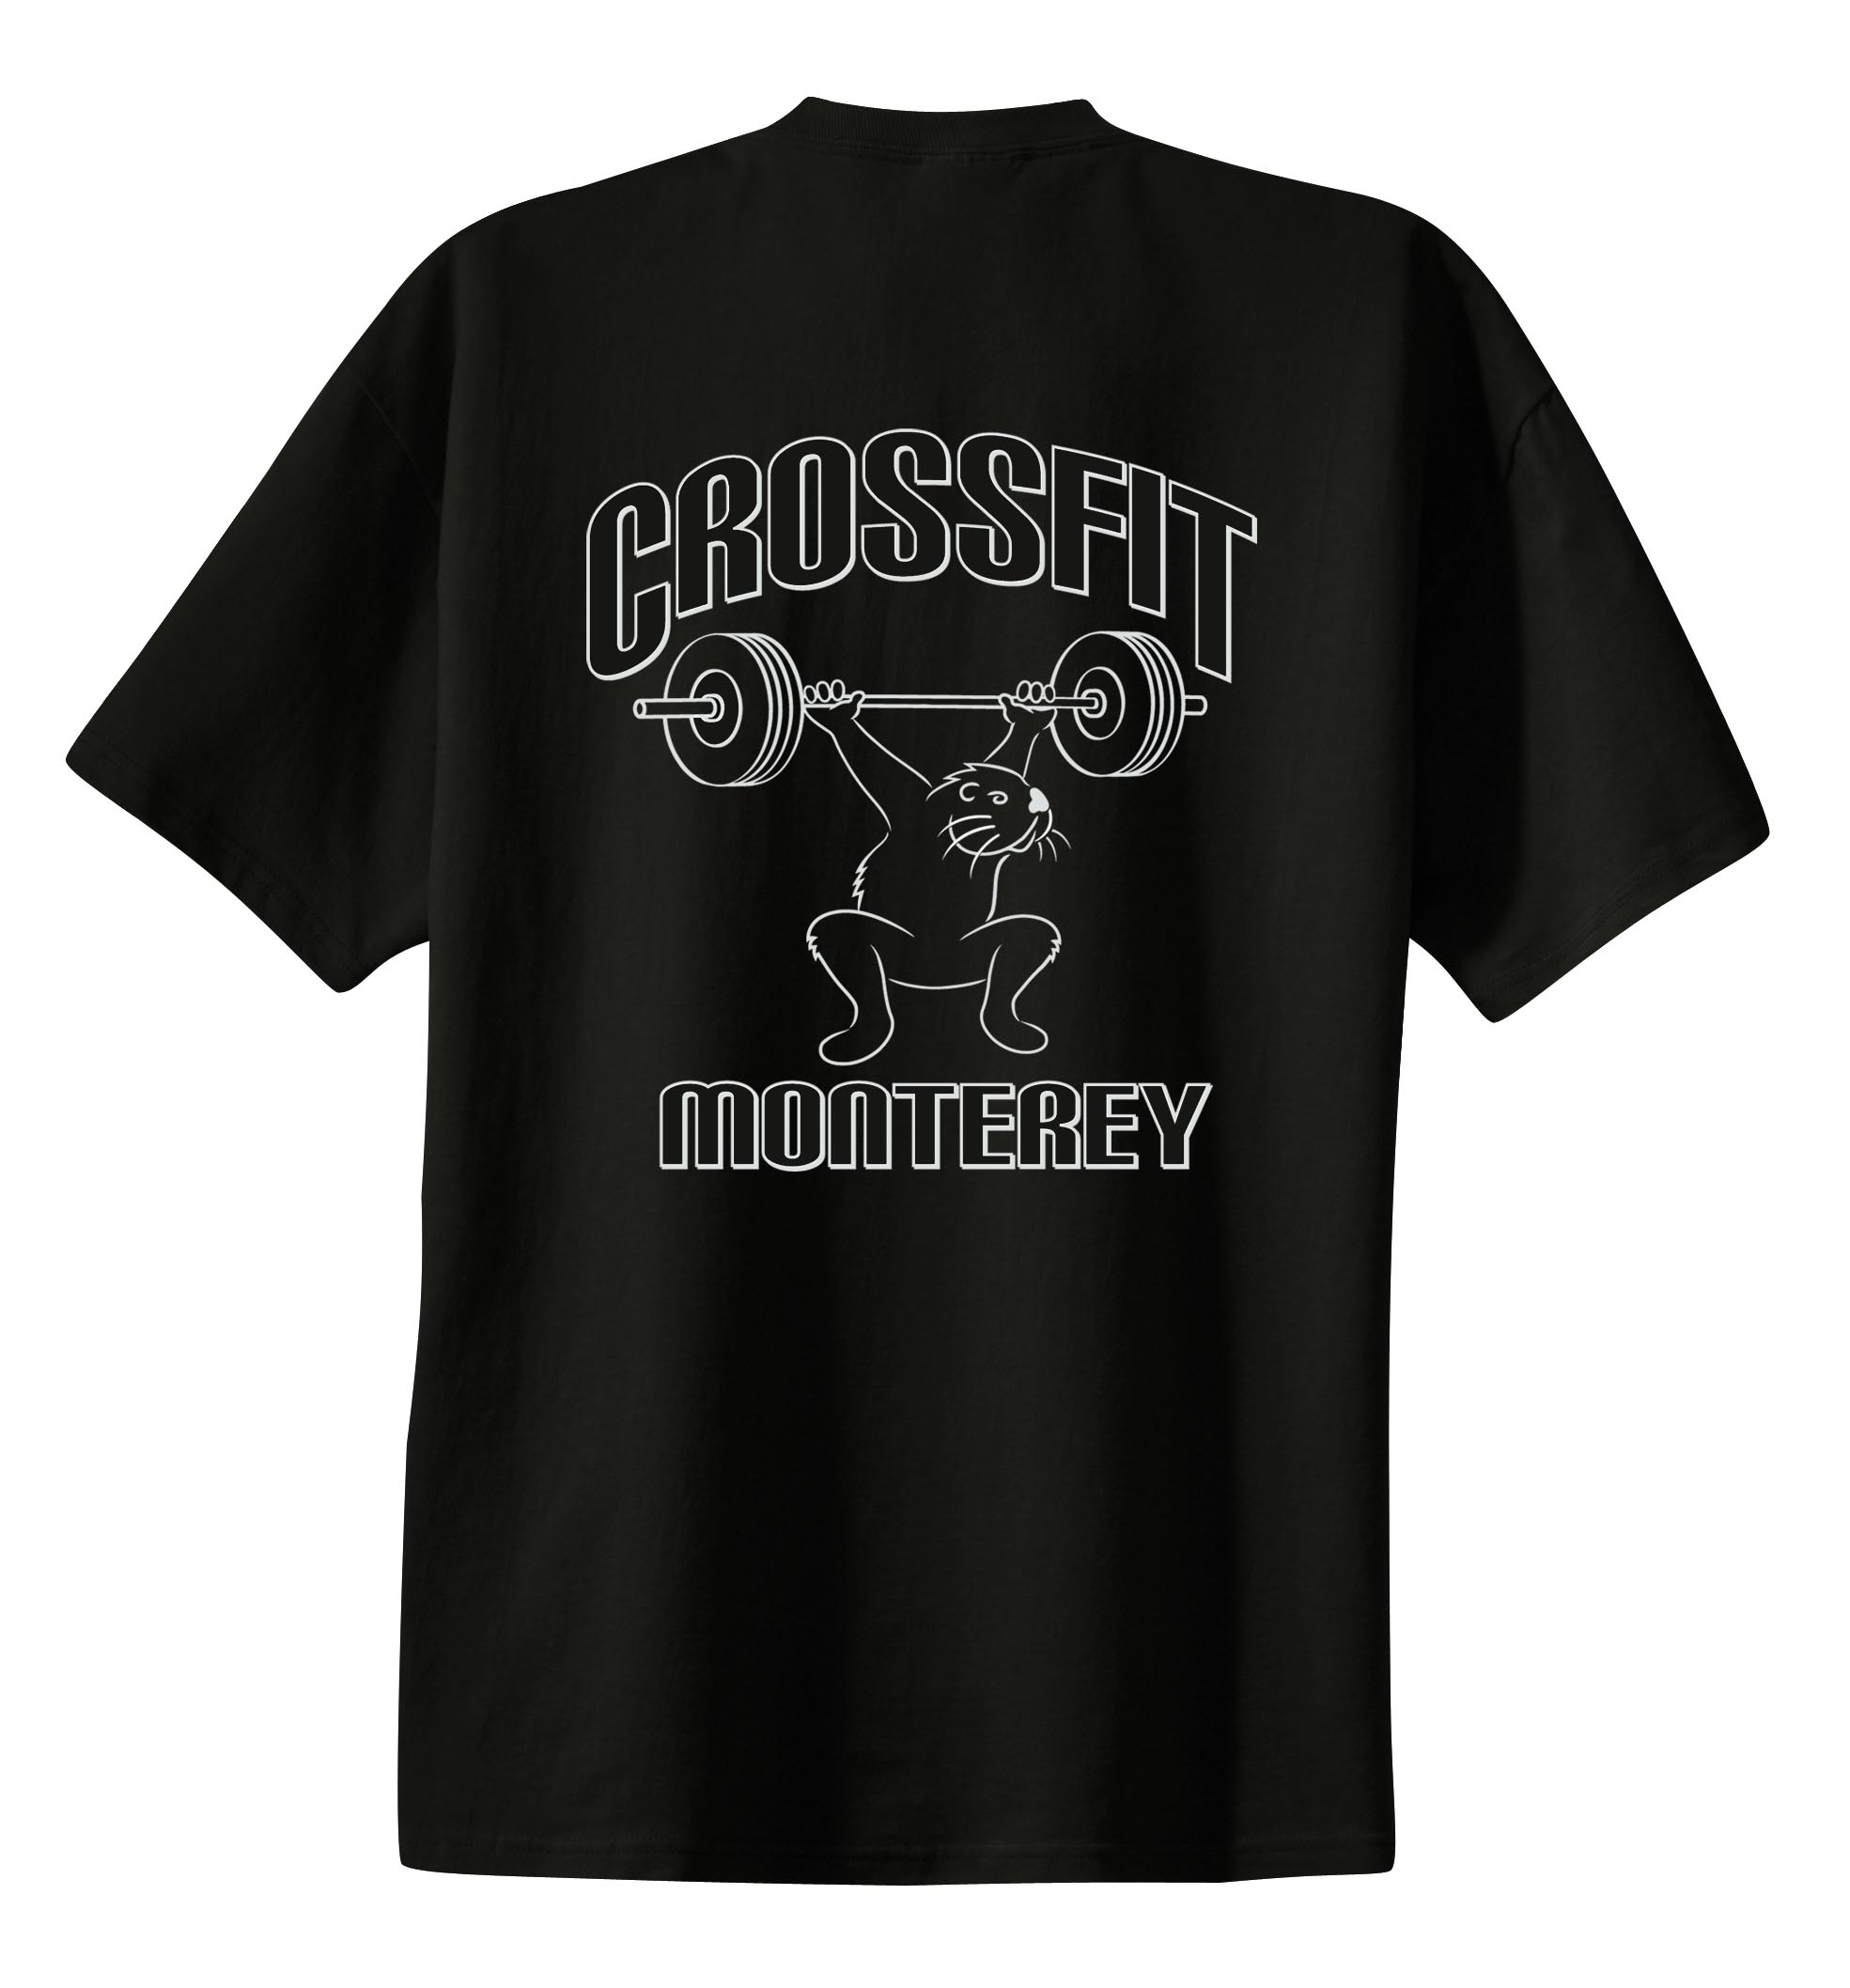 Crossfit Shirts